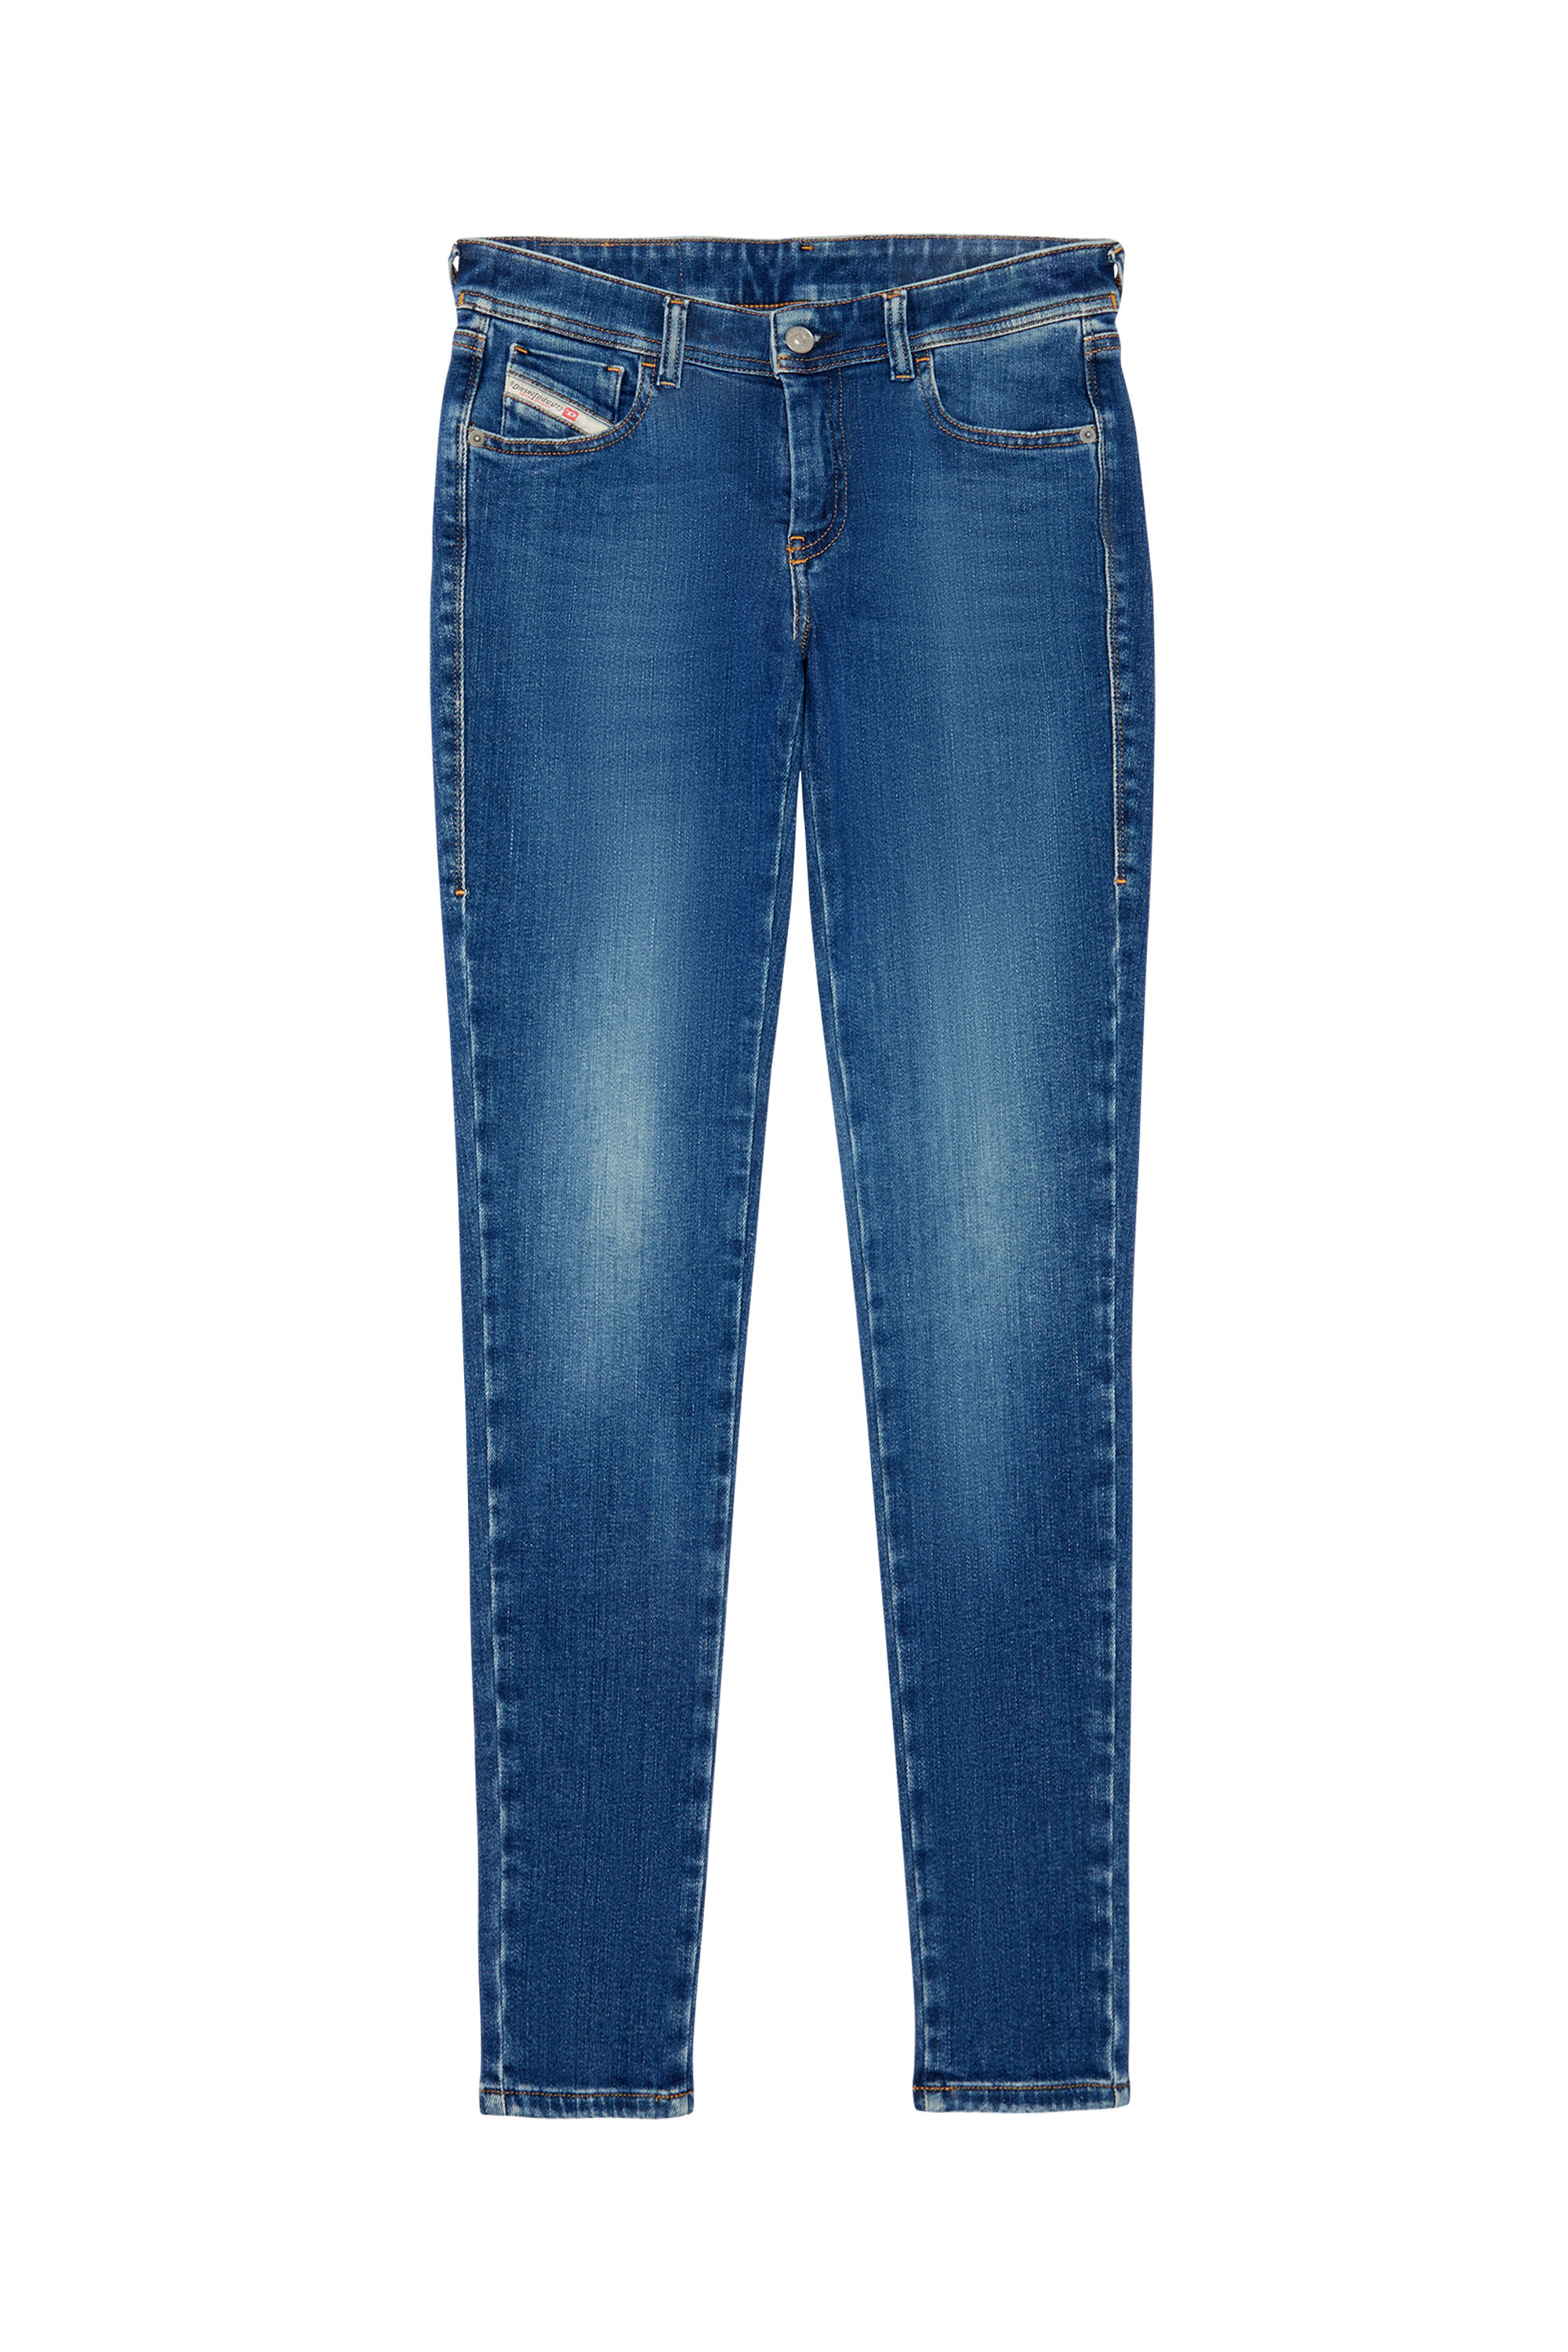 2018 SLANDY-LOW 09C21 Super skinny Jeans, Medium blue - Jeans